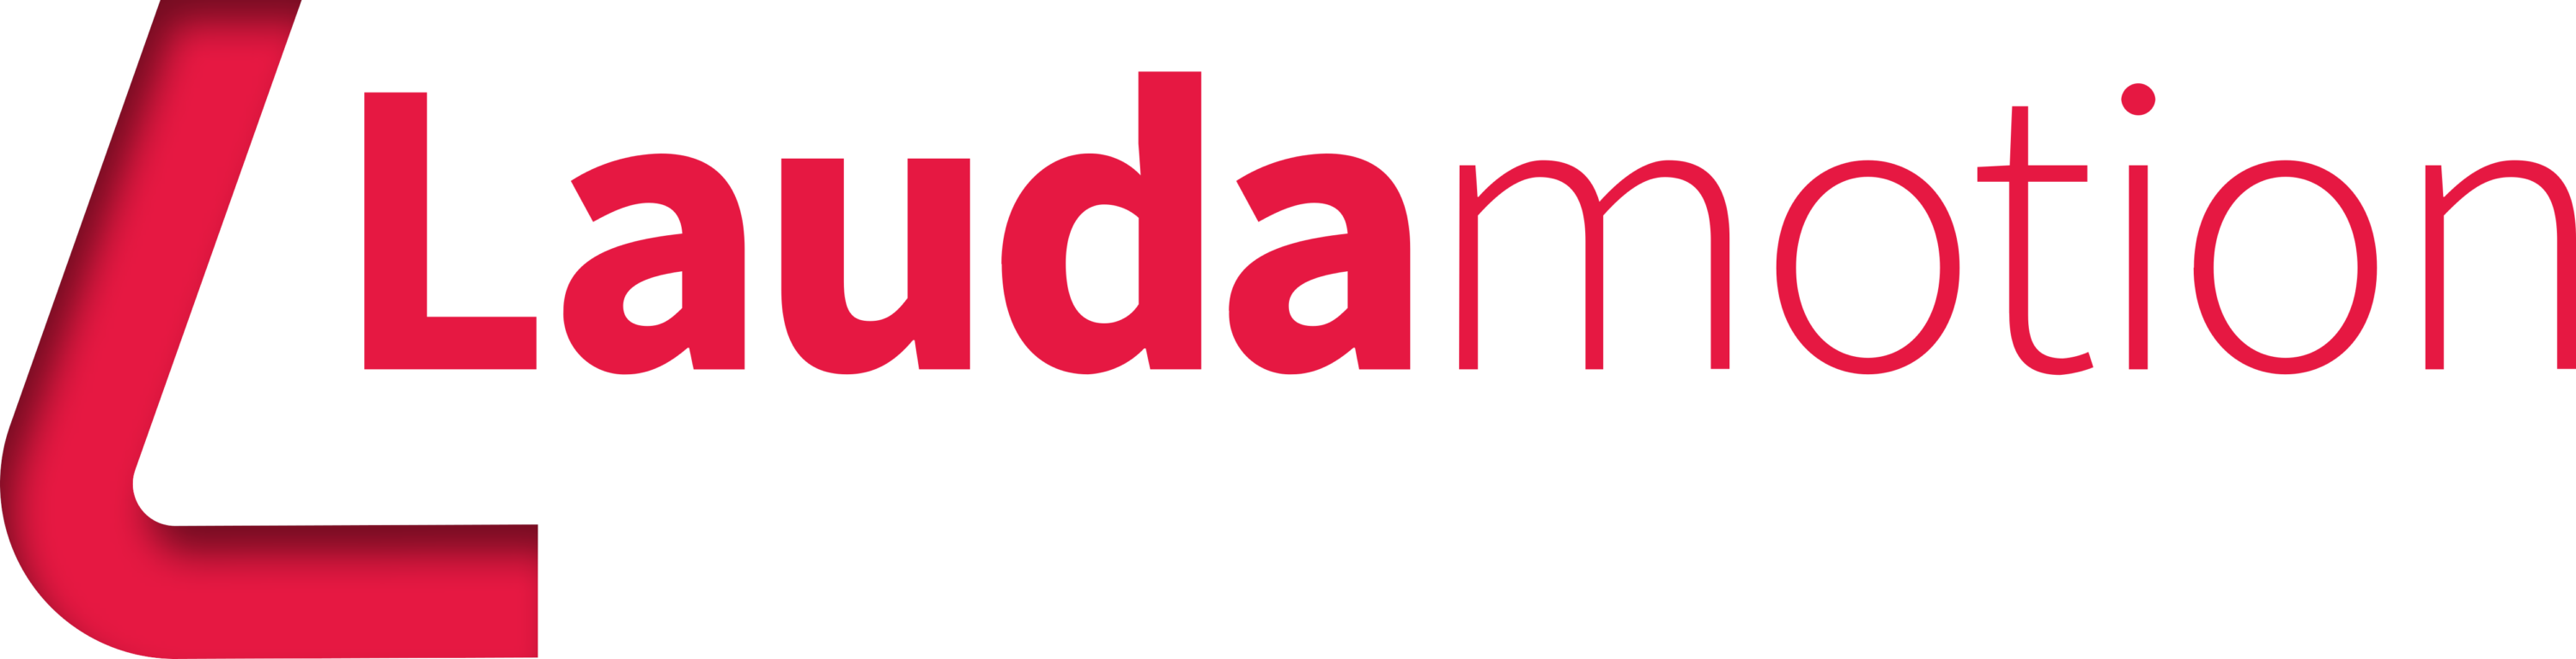 Laudamotion Logo